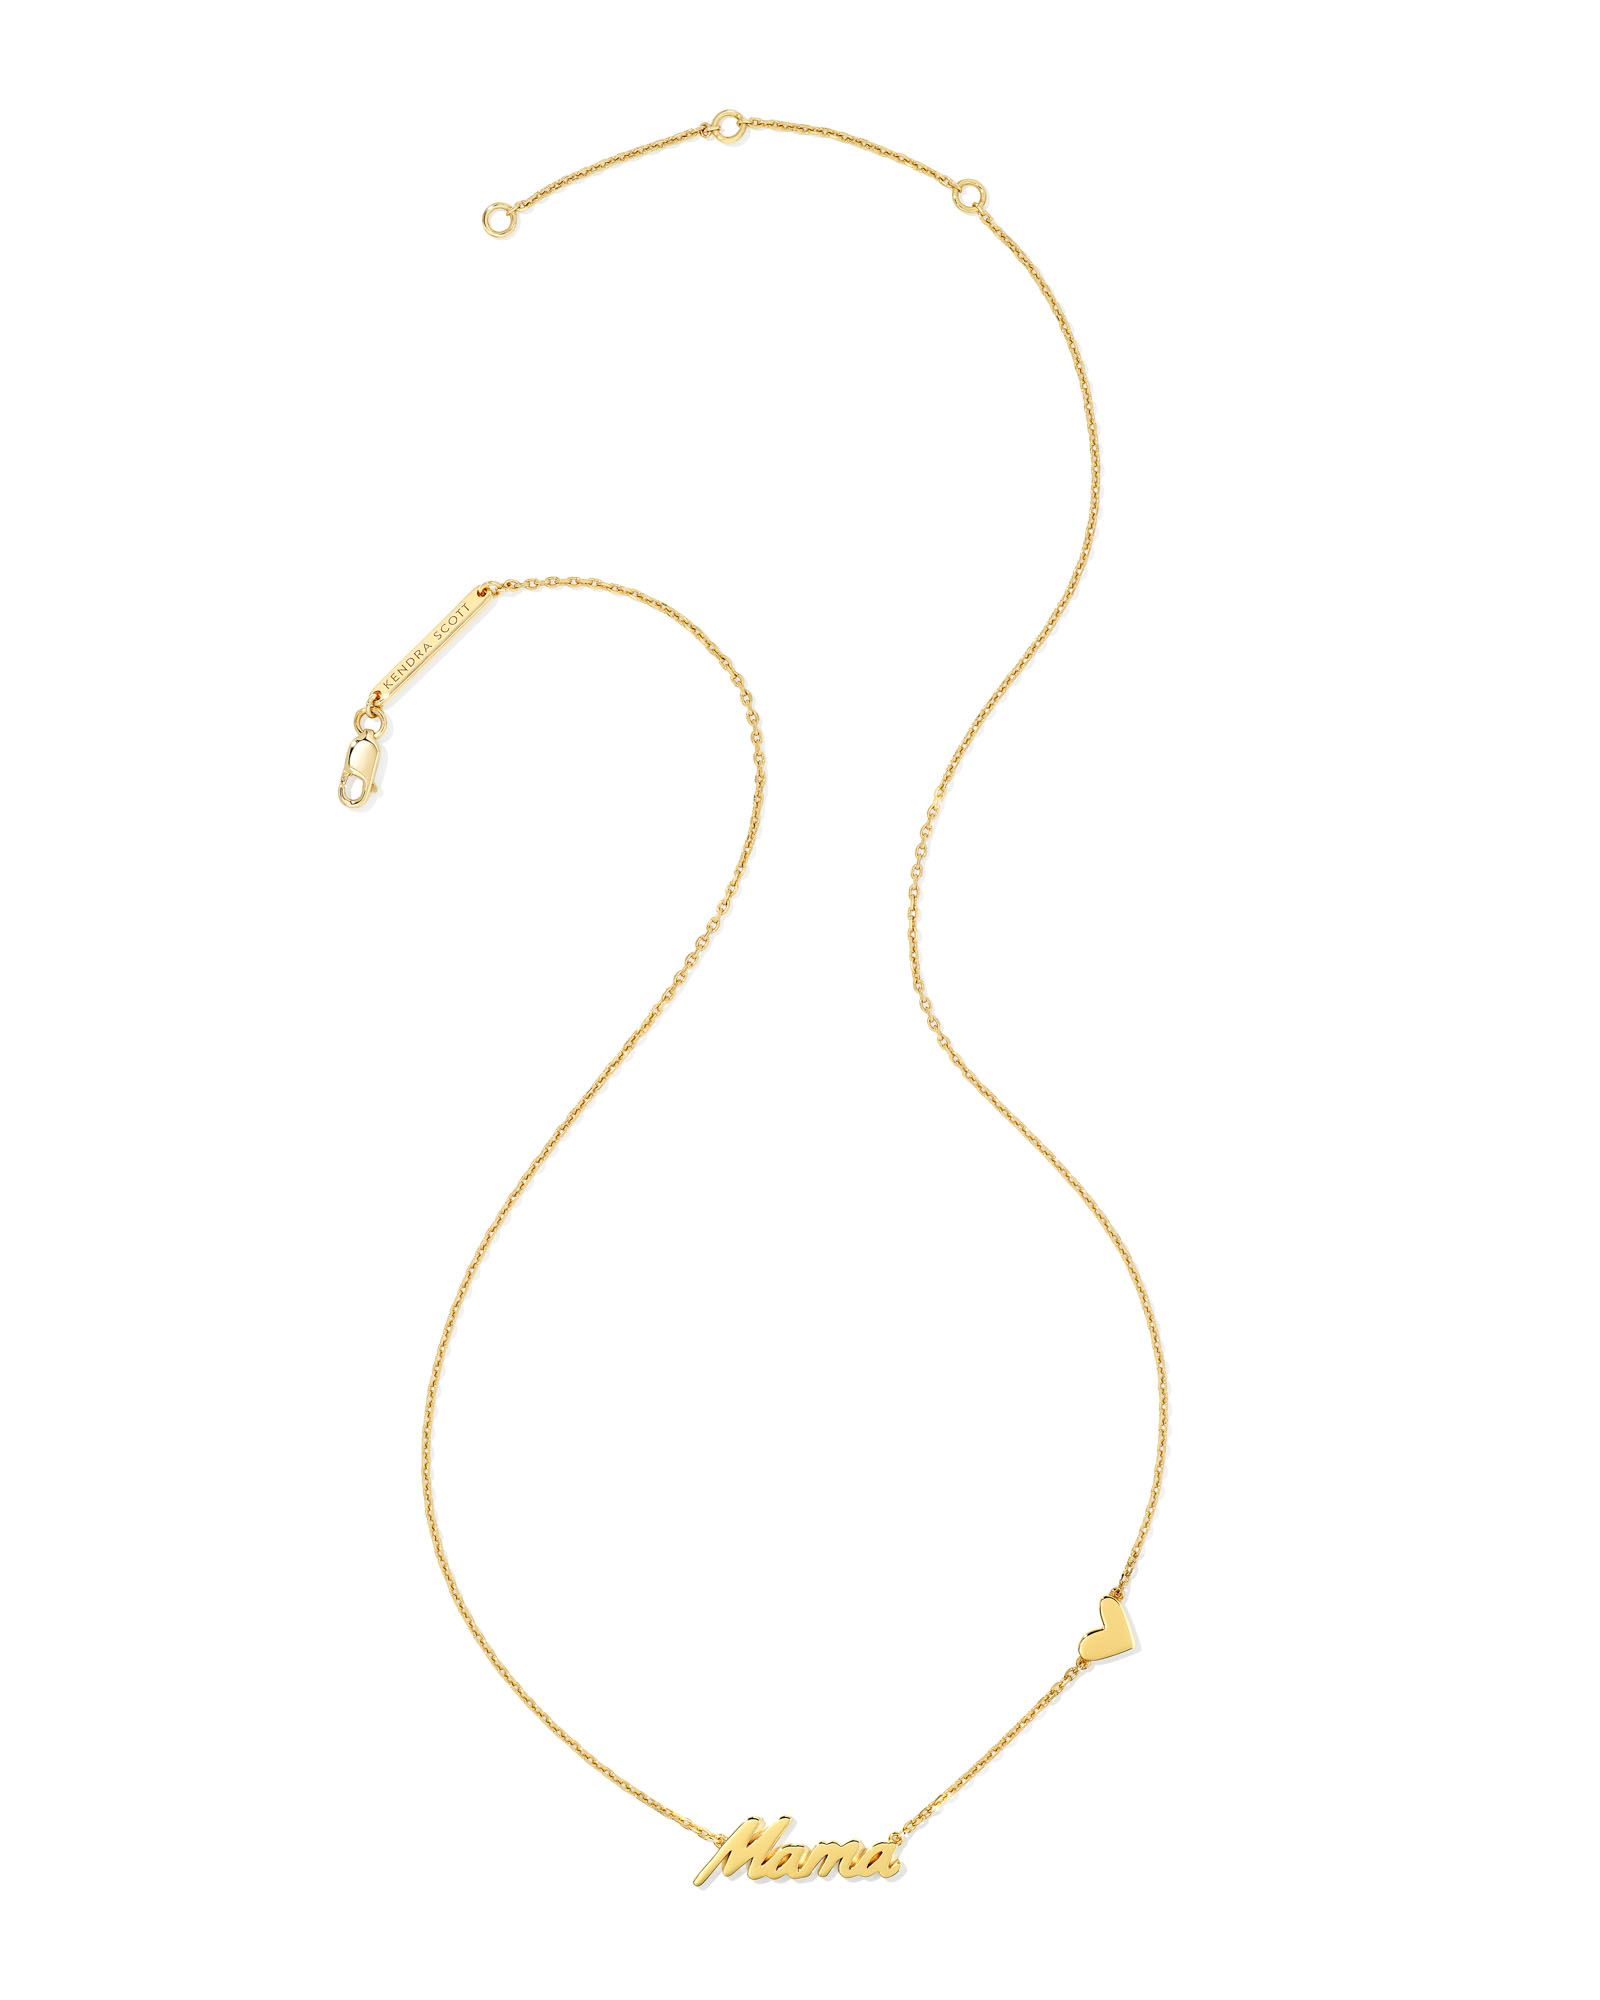 Florida Pendant Necklace in 18k Yellow Gold Vermeil | Kendra Scott